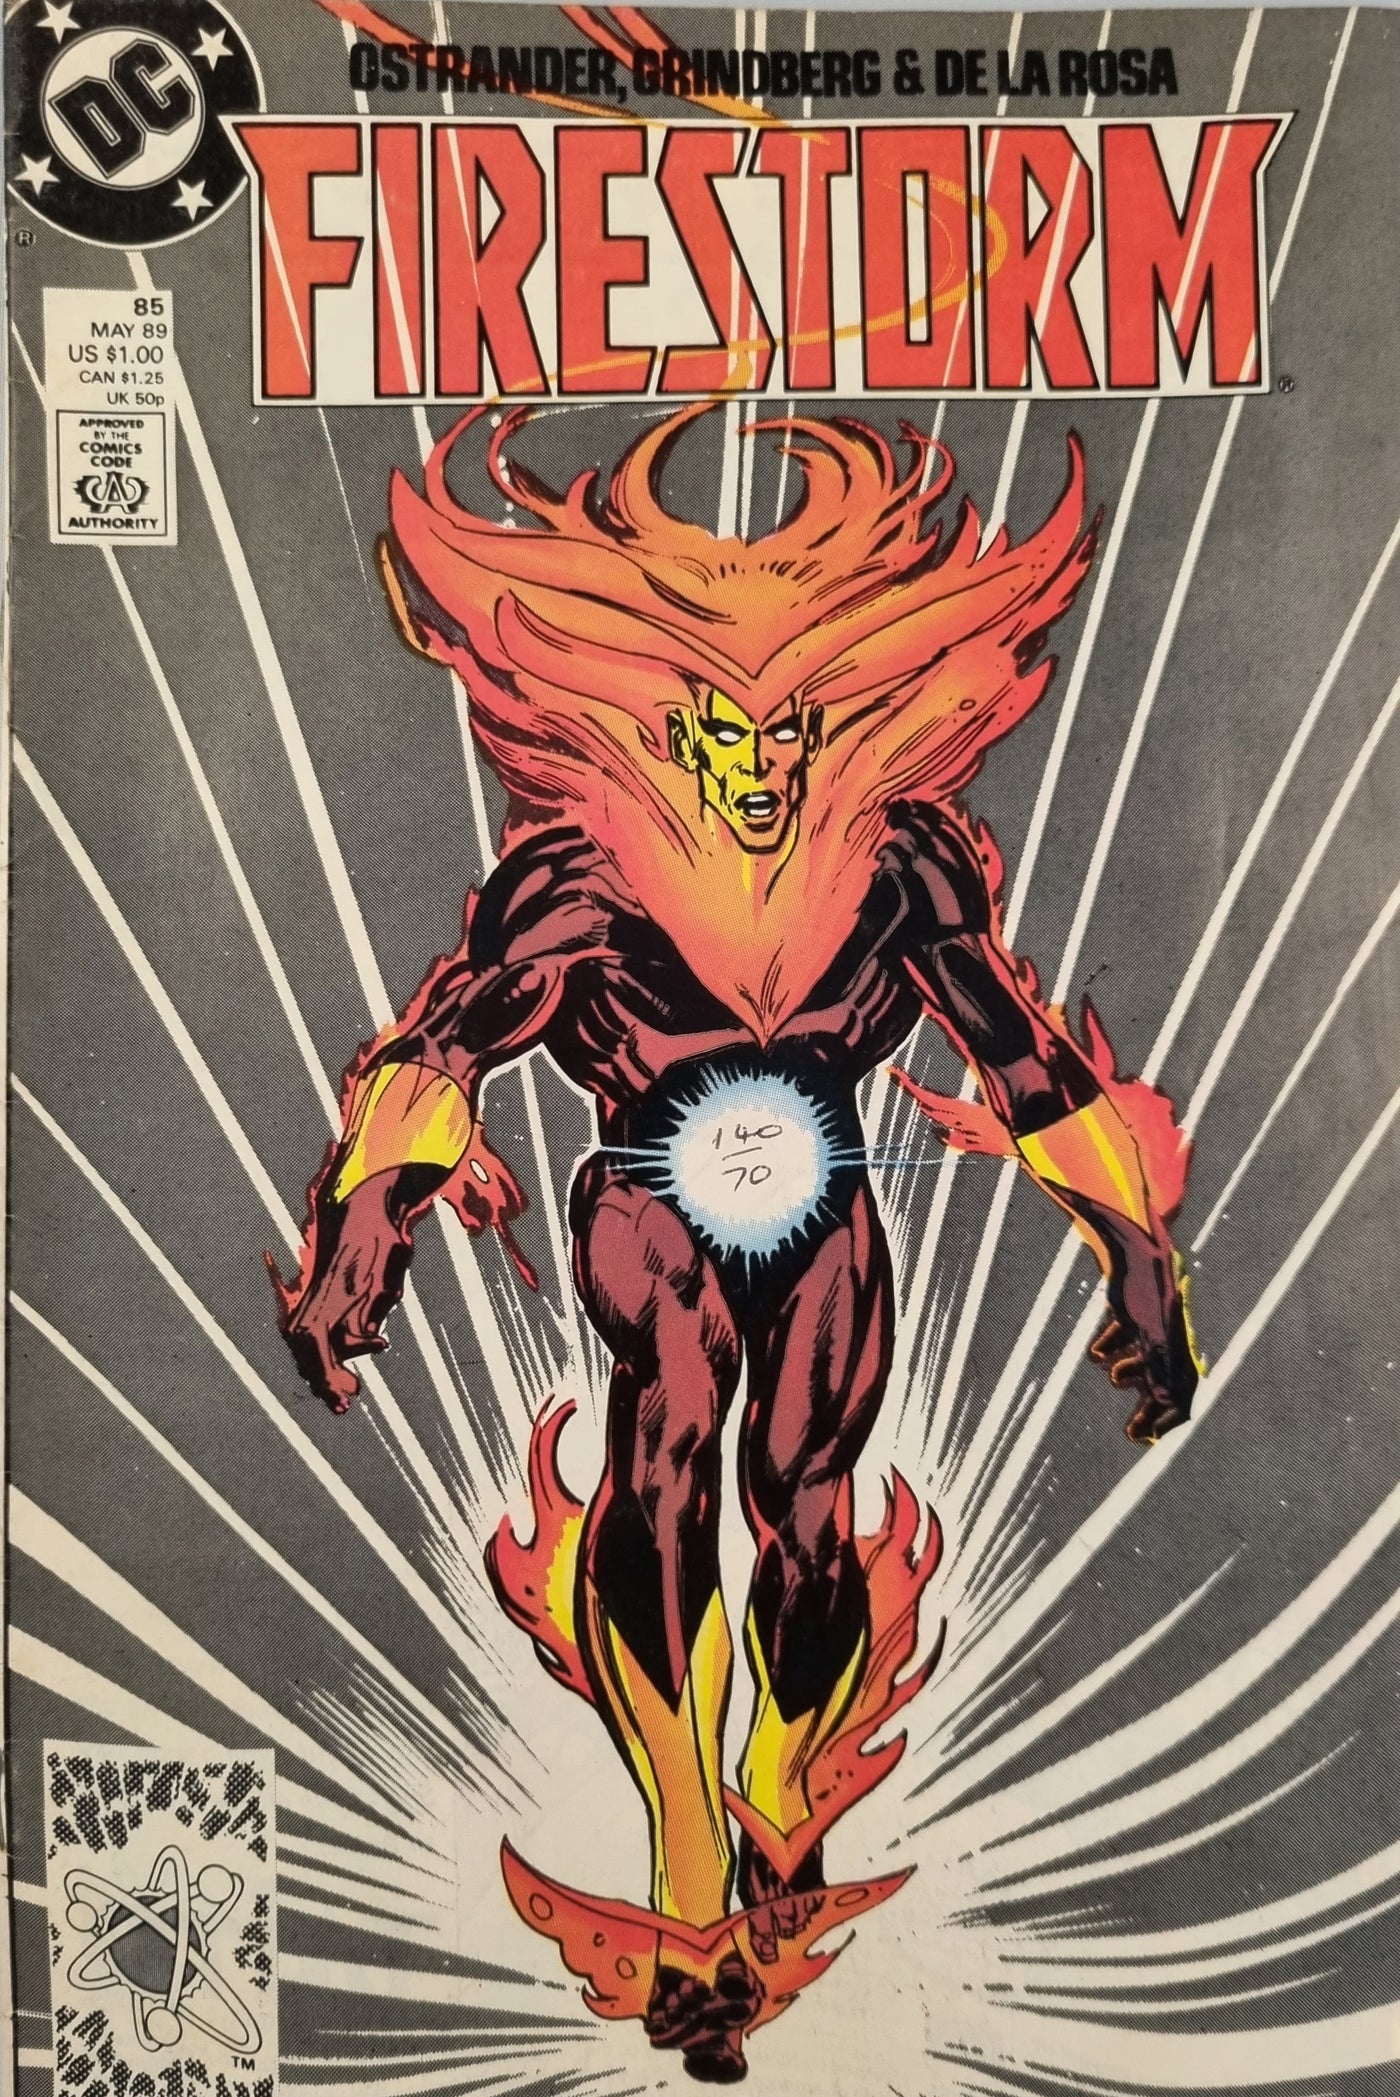 Firestorm (Volume 2) #85